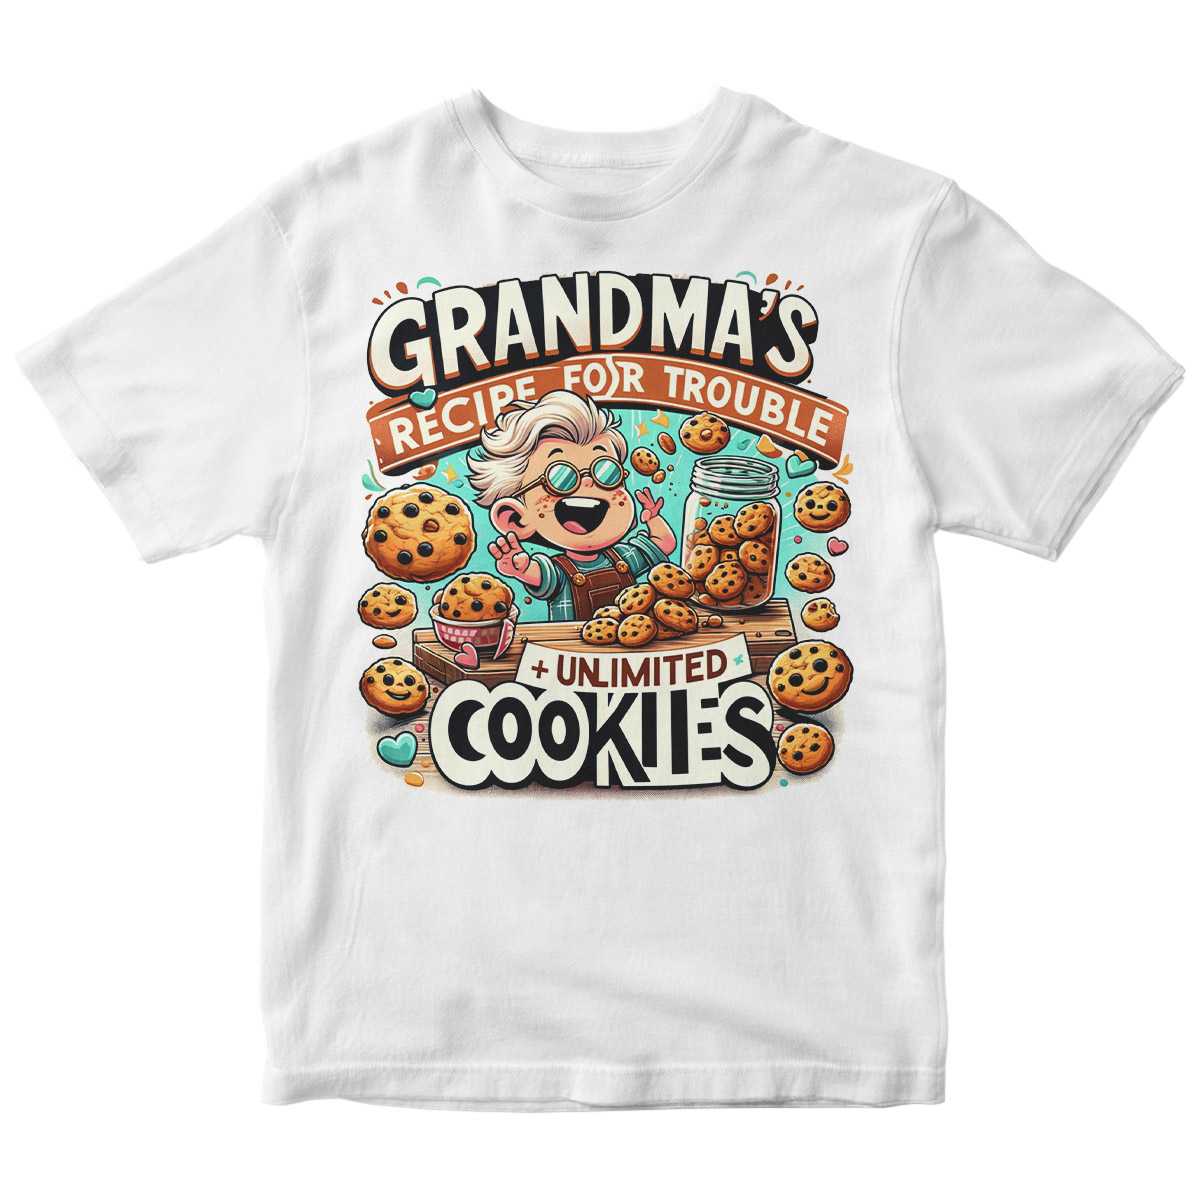 Grandmas Recipe For Trouble T-Shirt